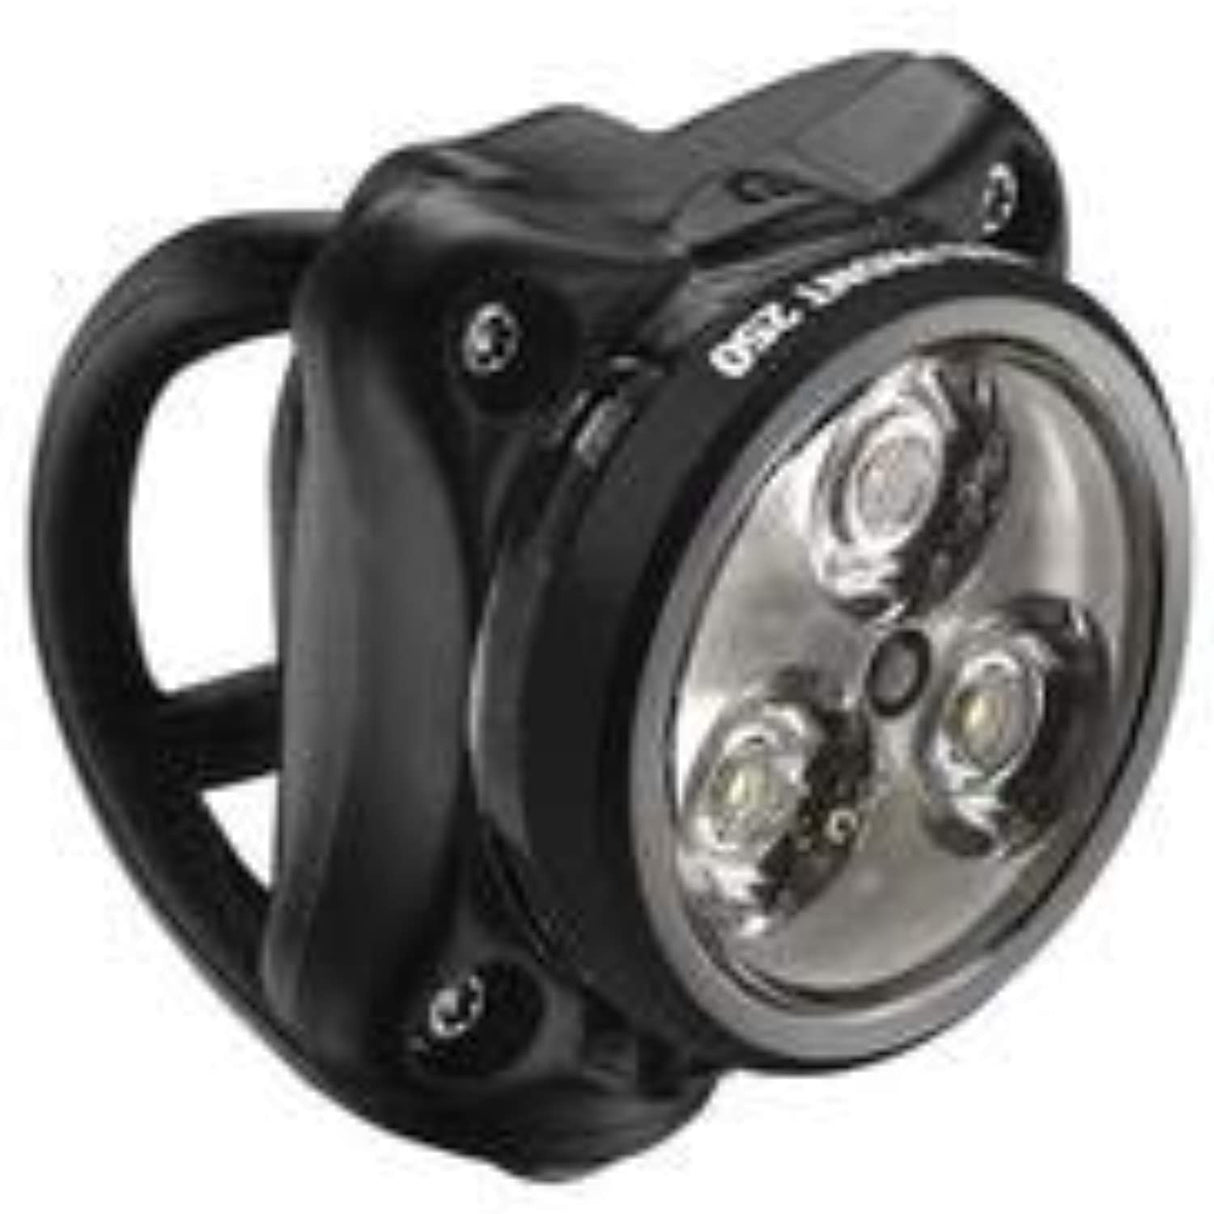 LEZYNE Zecto Drive Headlight Black 250 Lumens Sports Full Catalog Lezyne